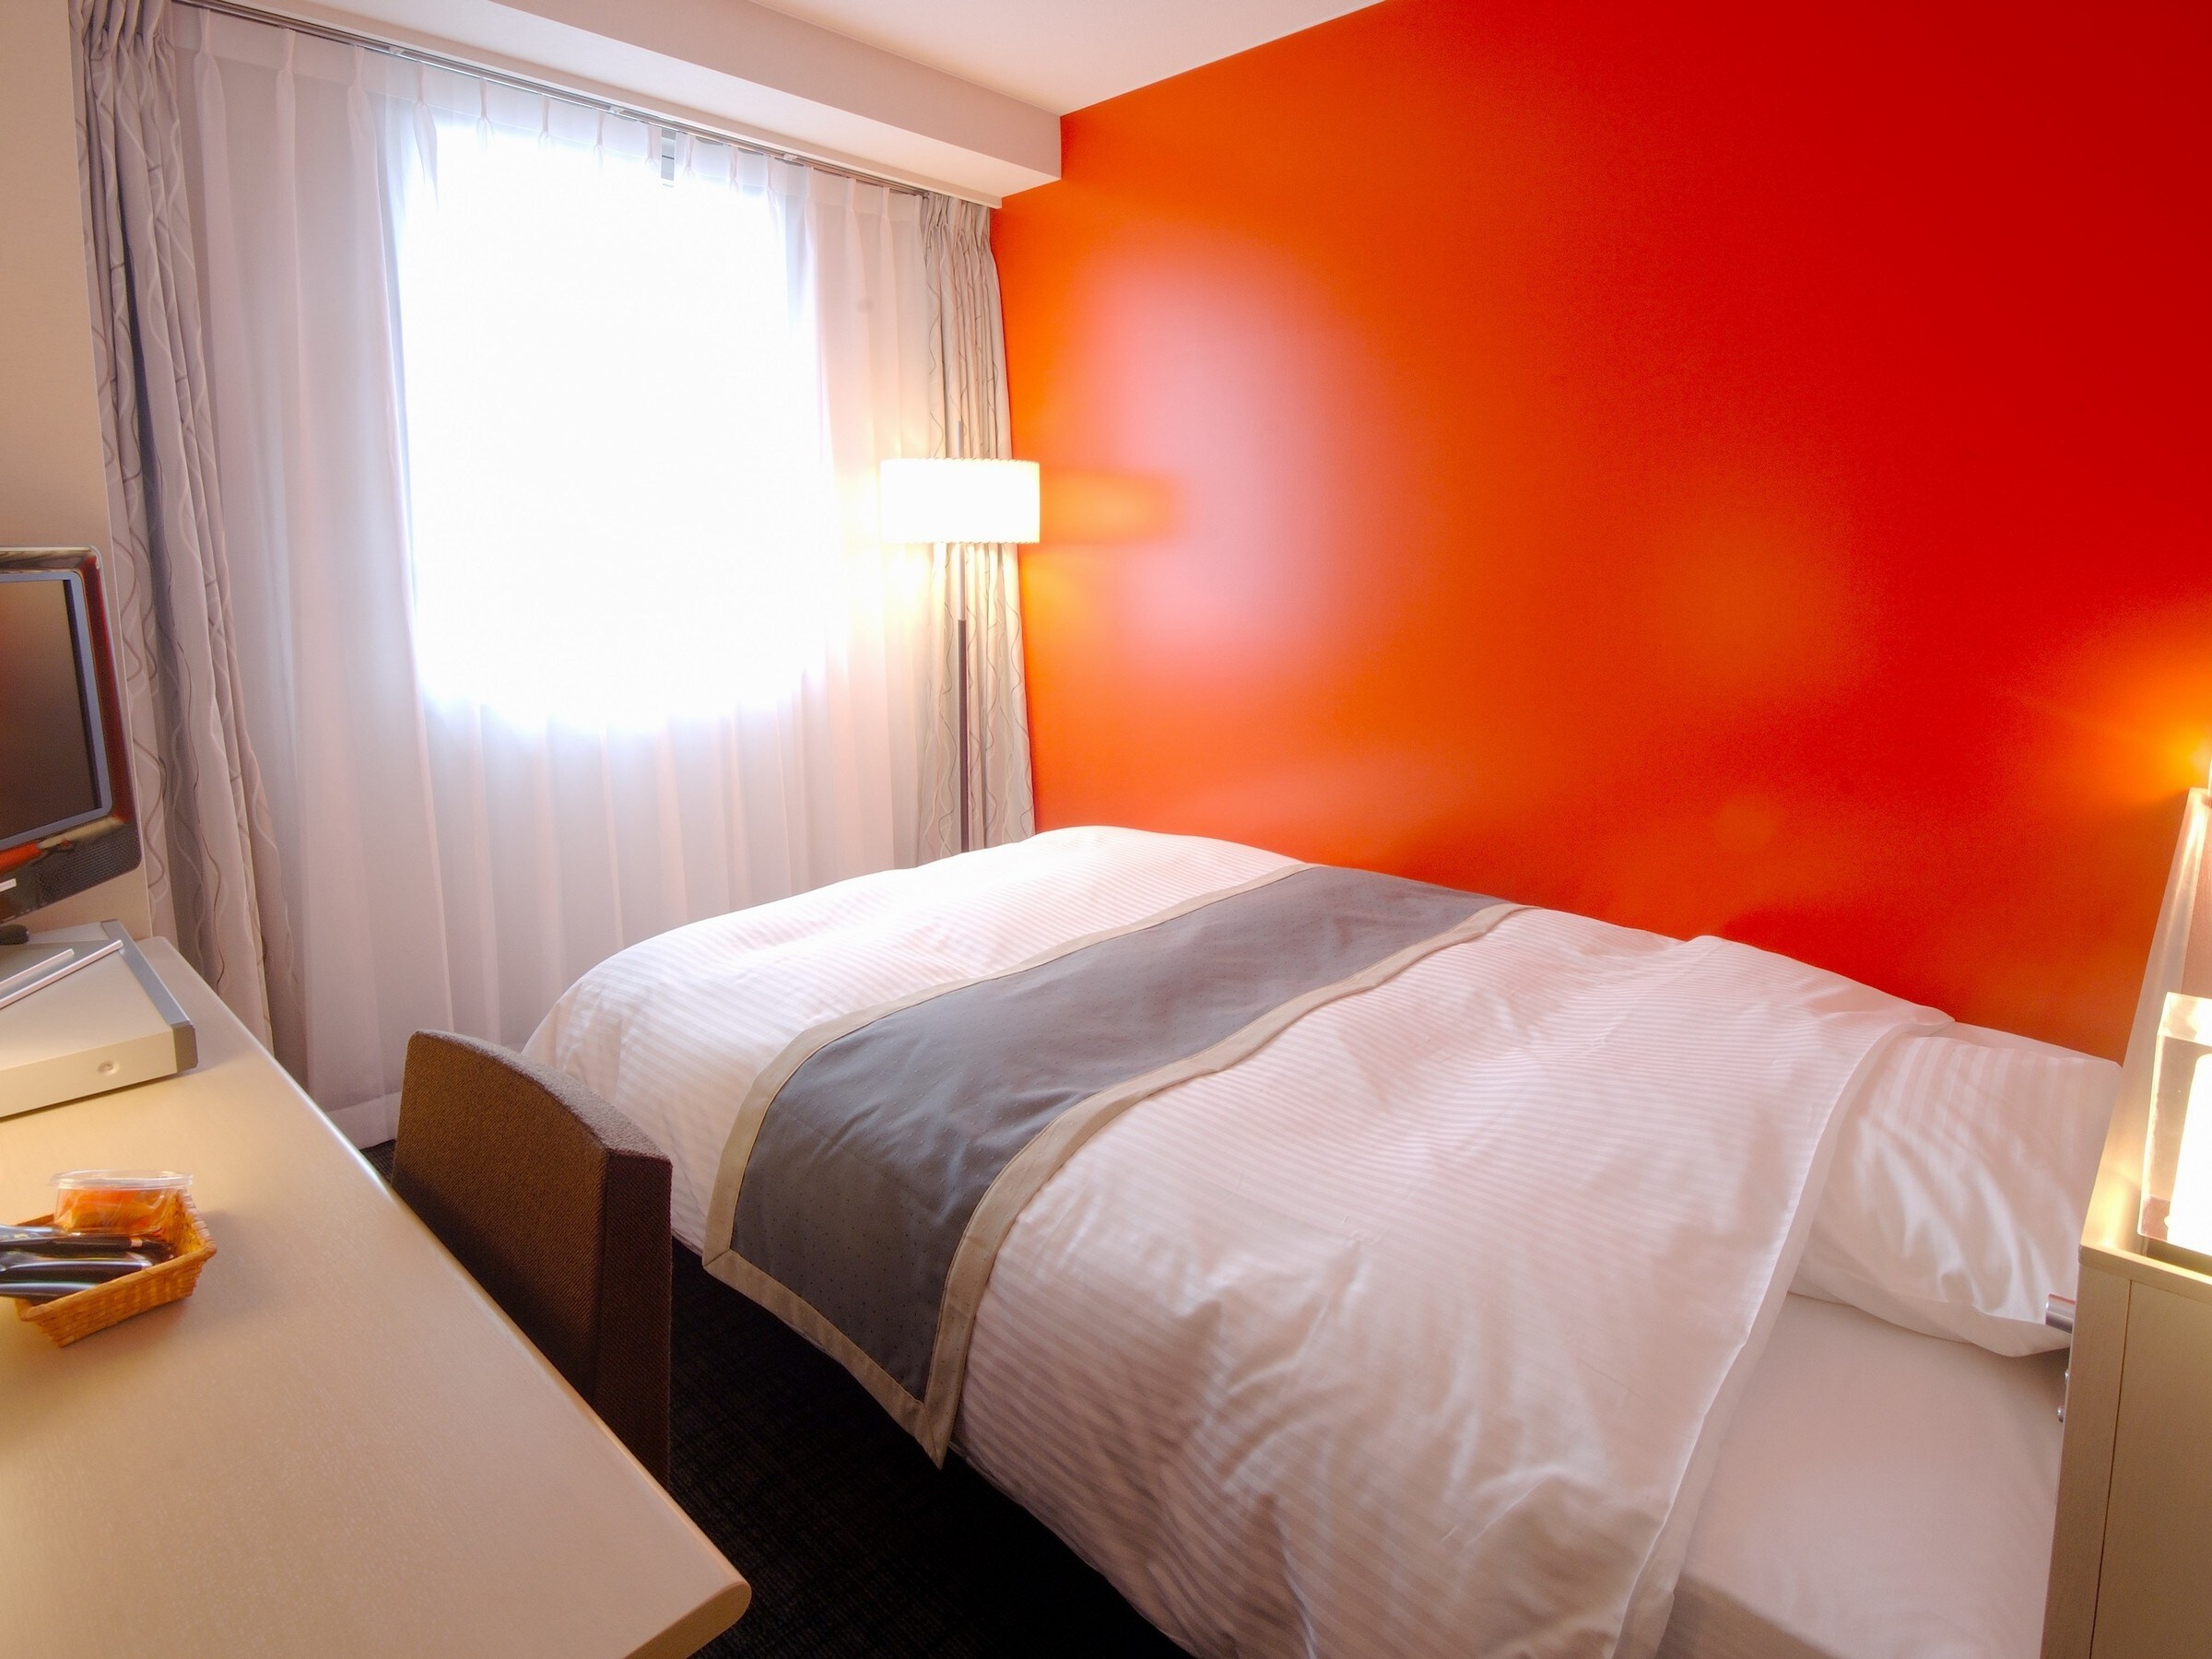 房间橙色